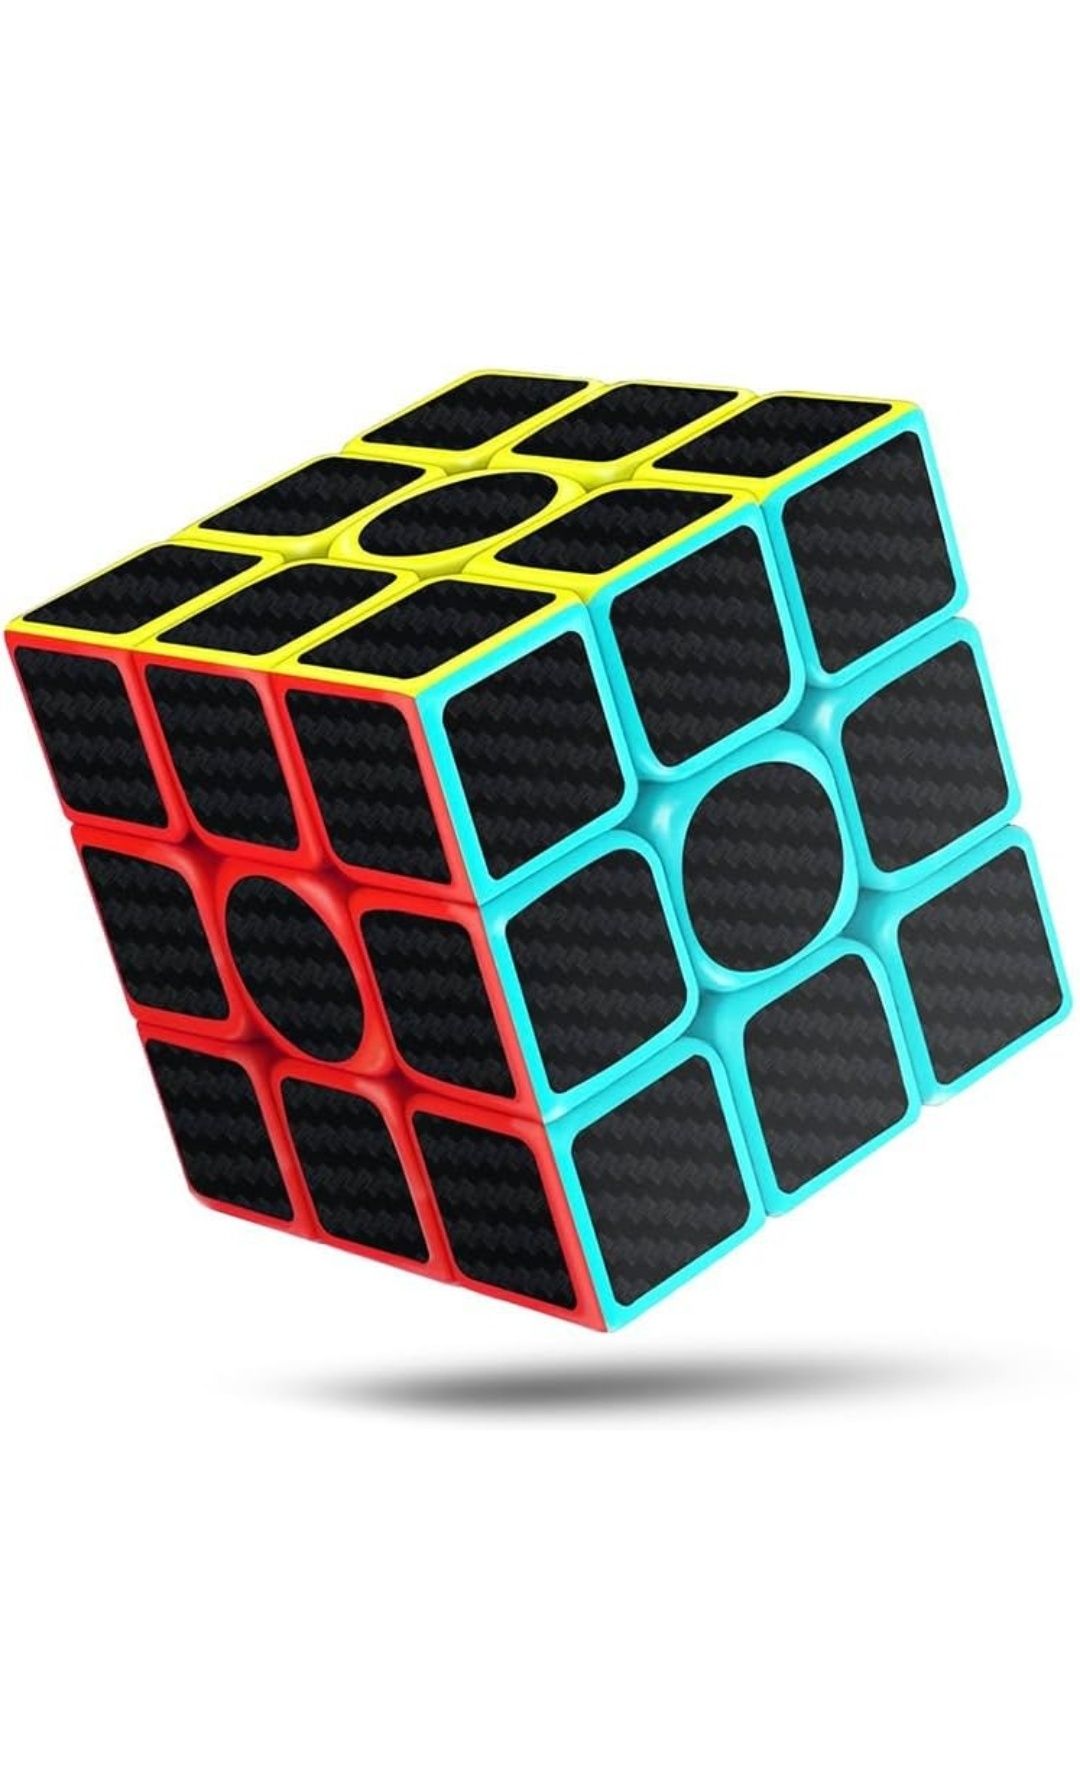 Cubo magico carbon tipo cubo rubik 3x3